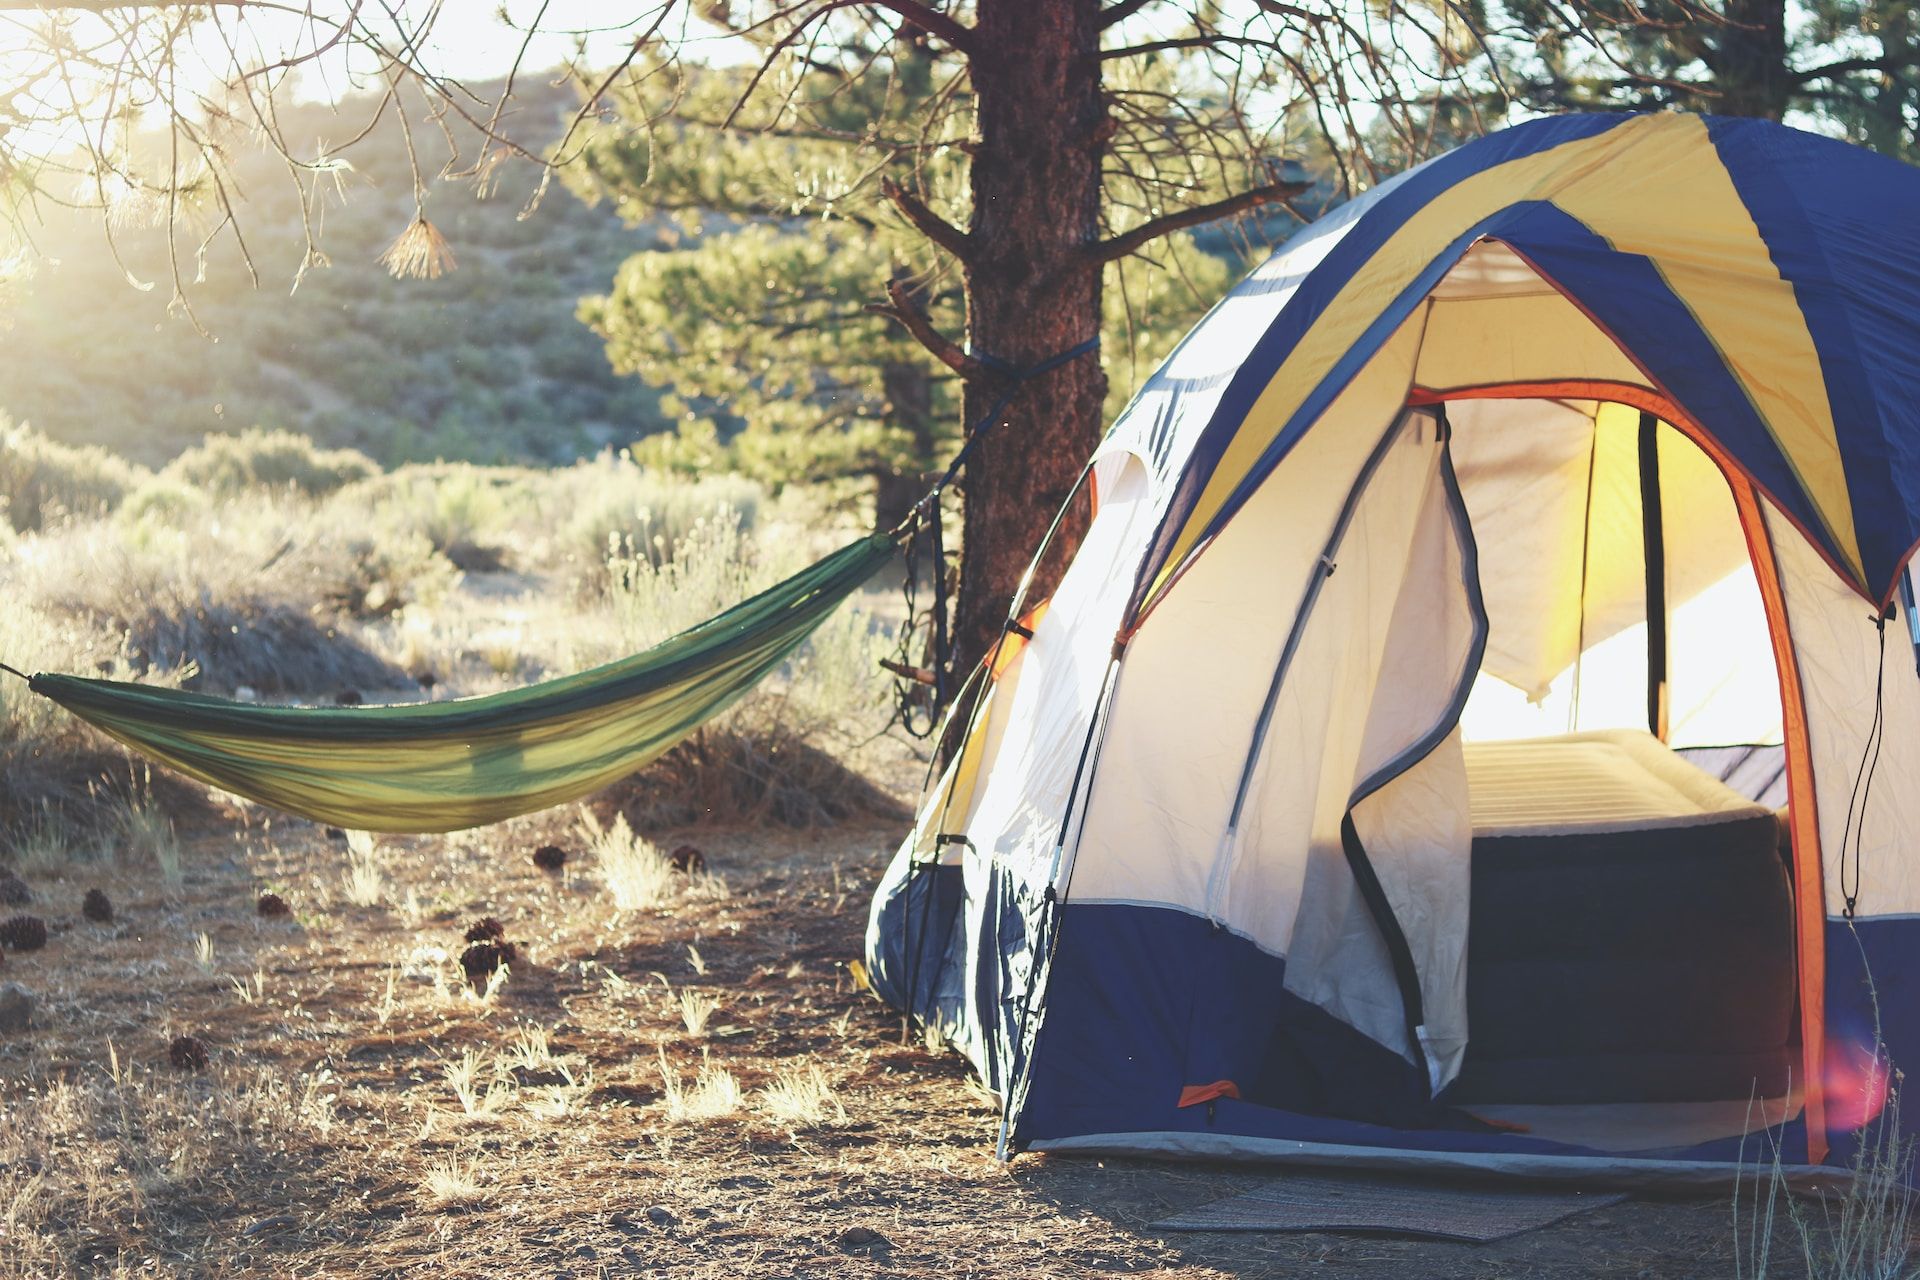 Camping tent beside a green hammock